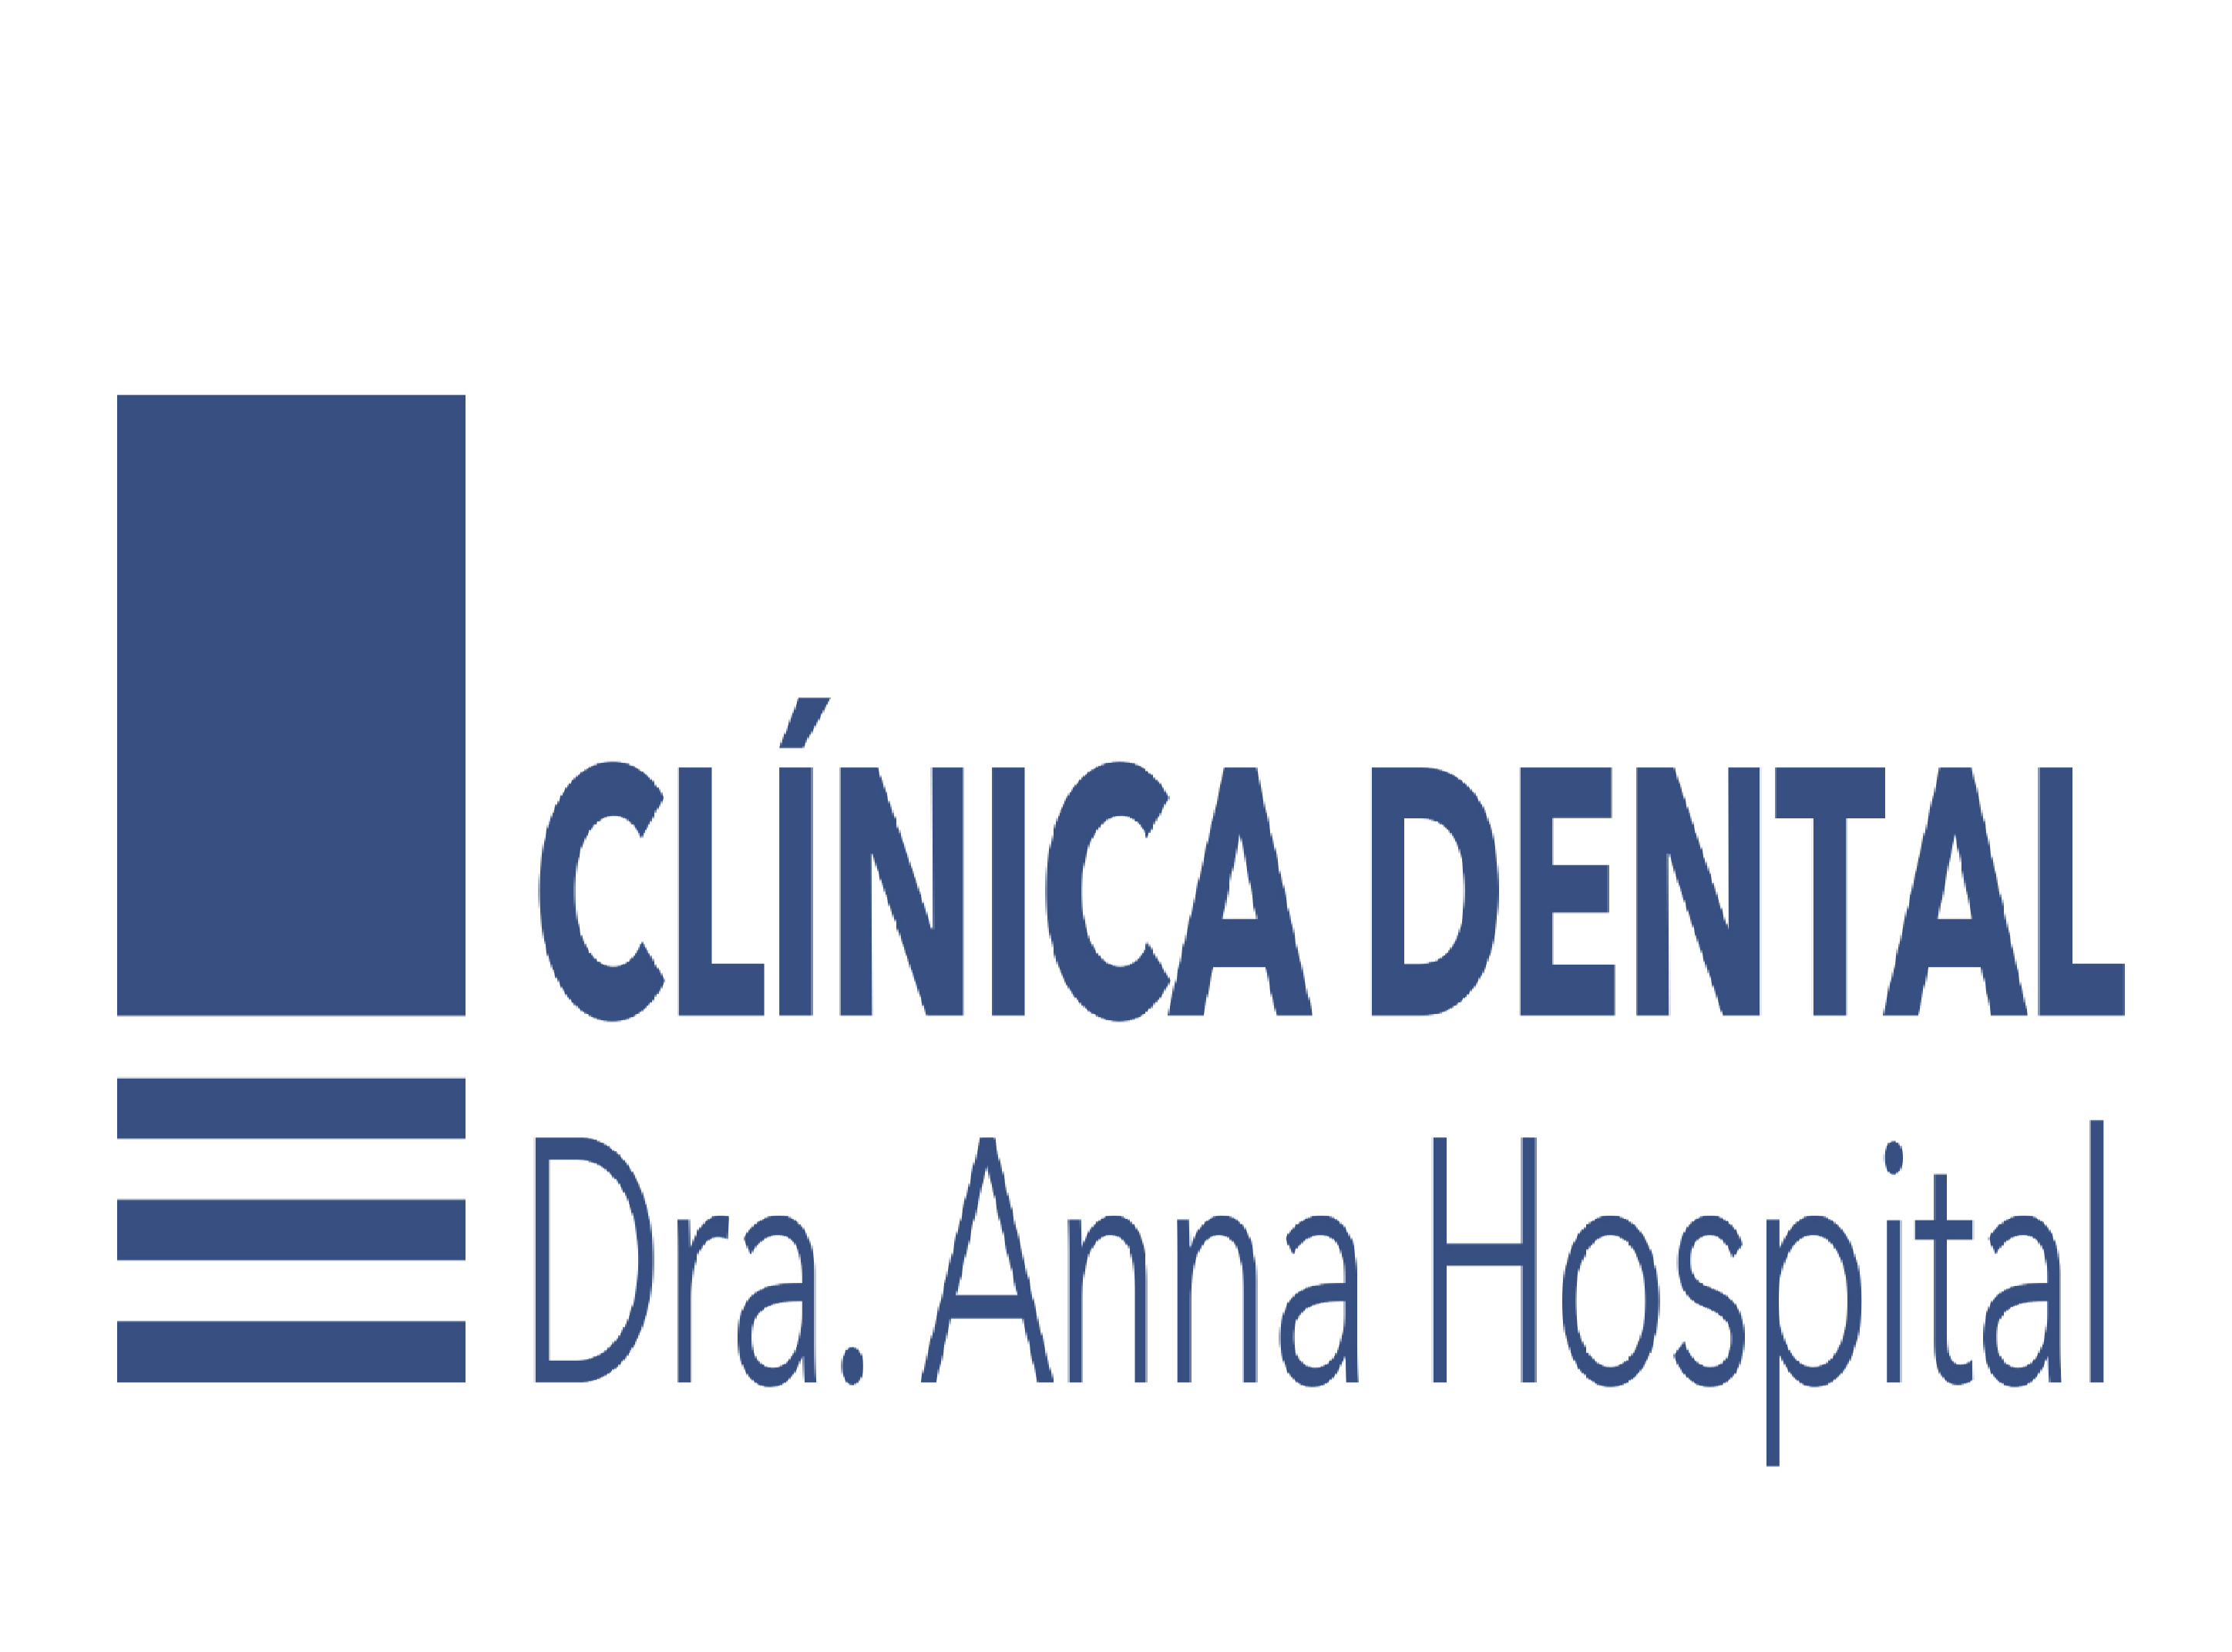 CLINICA DENTAL DRA. ANNA HOSPITAL